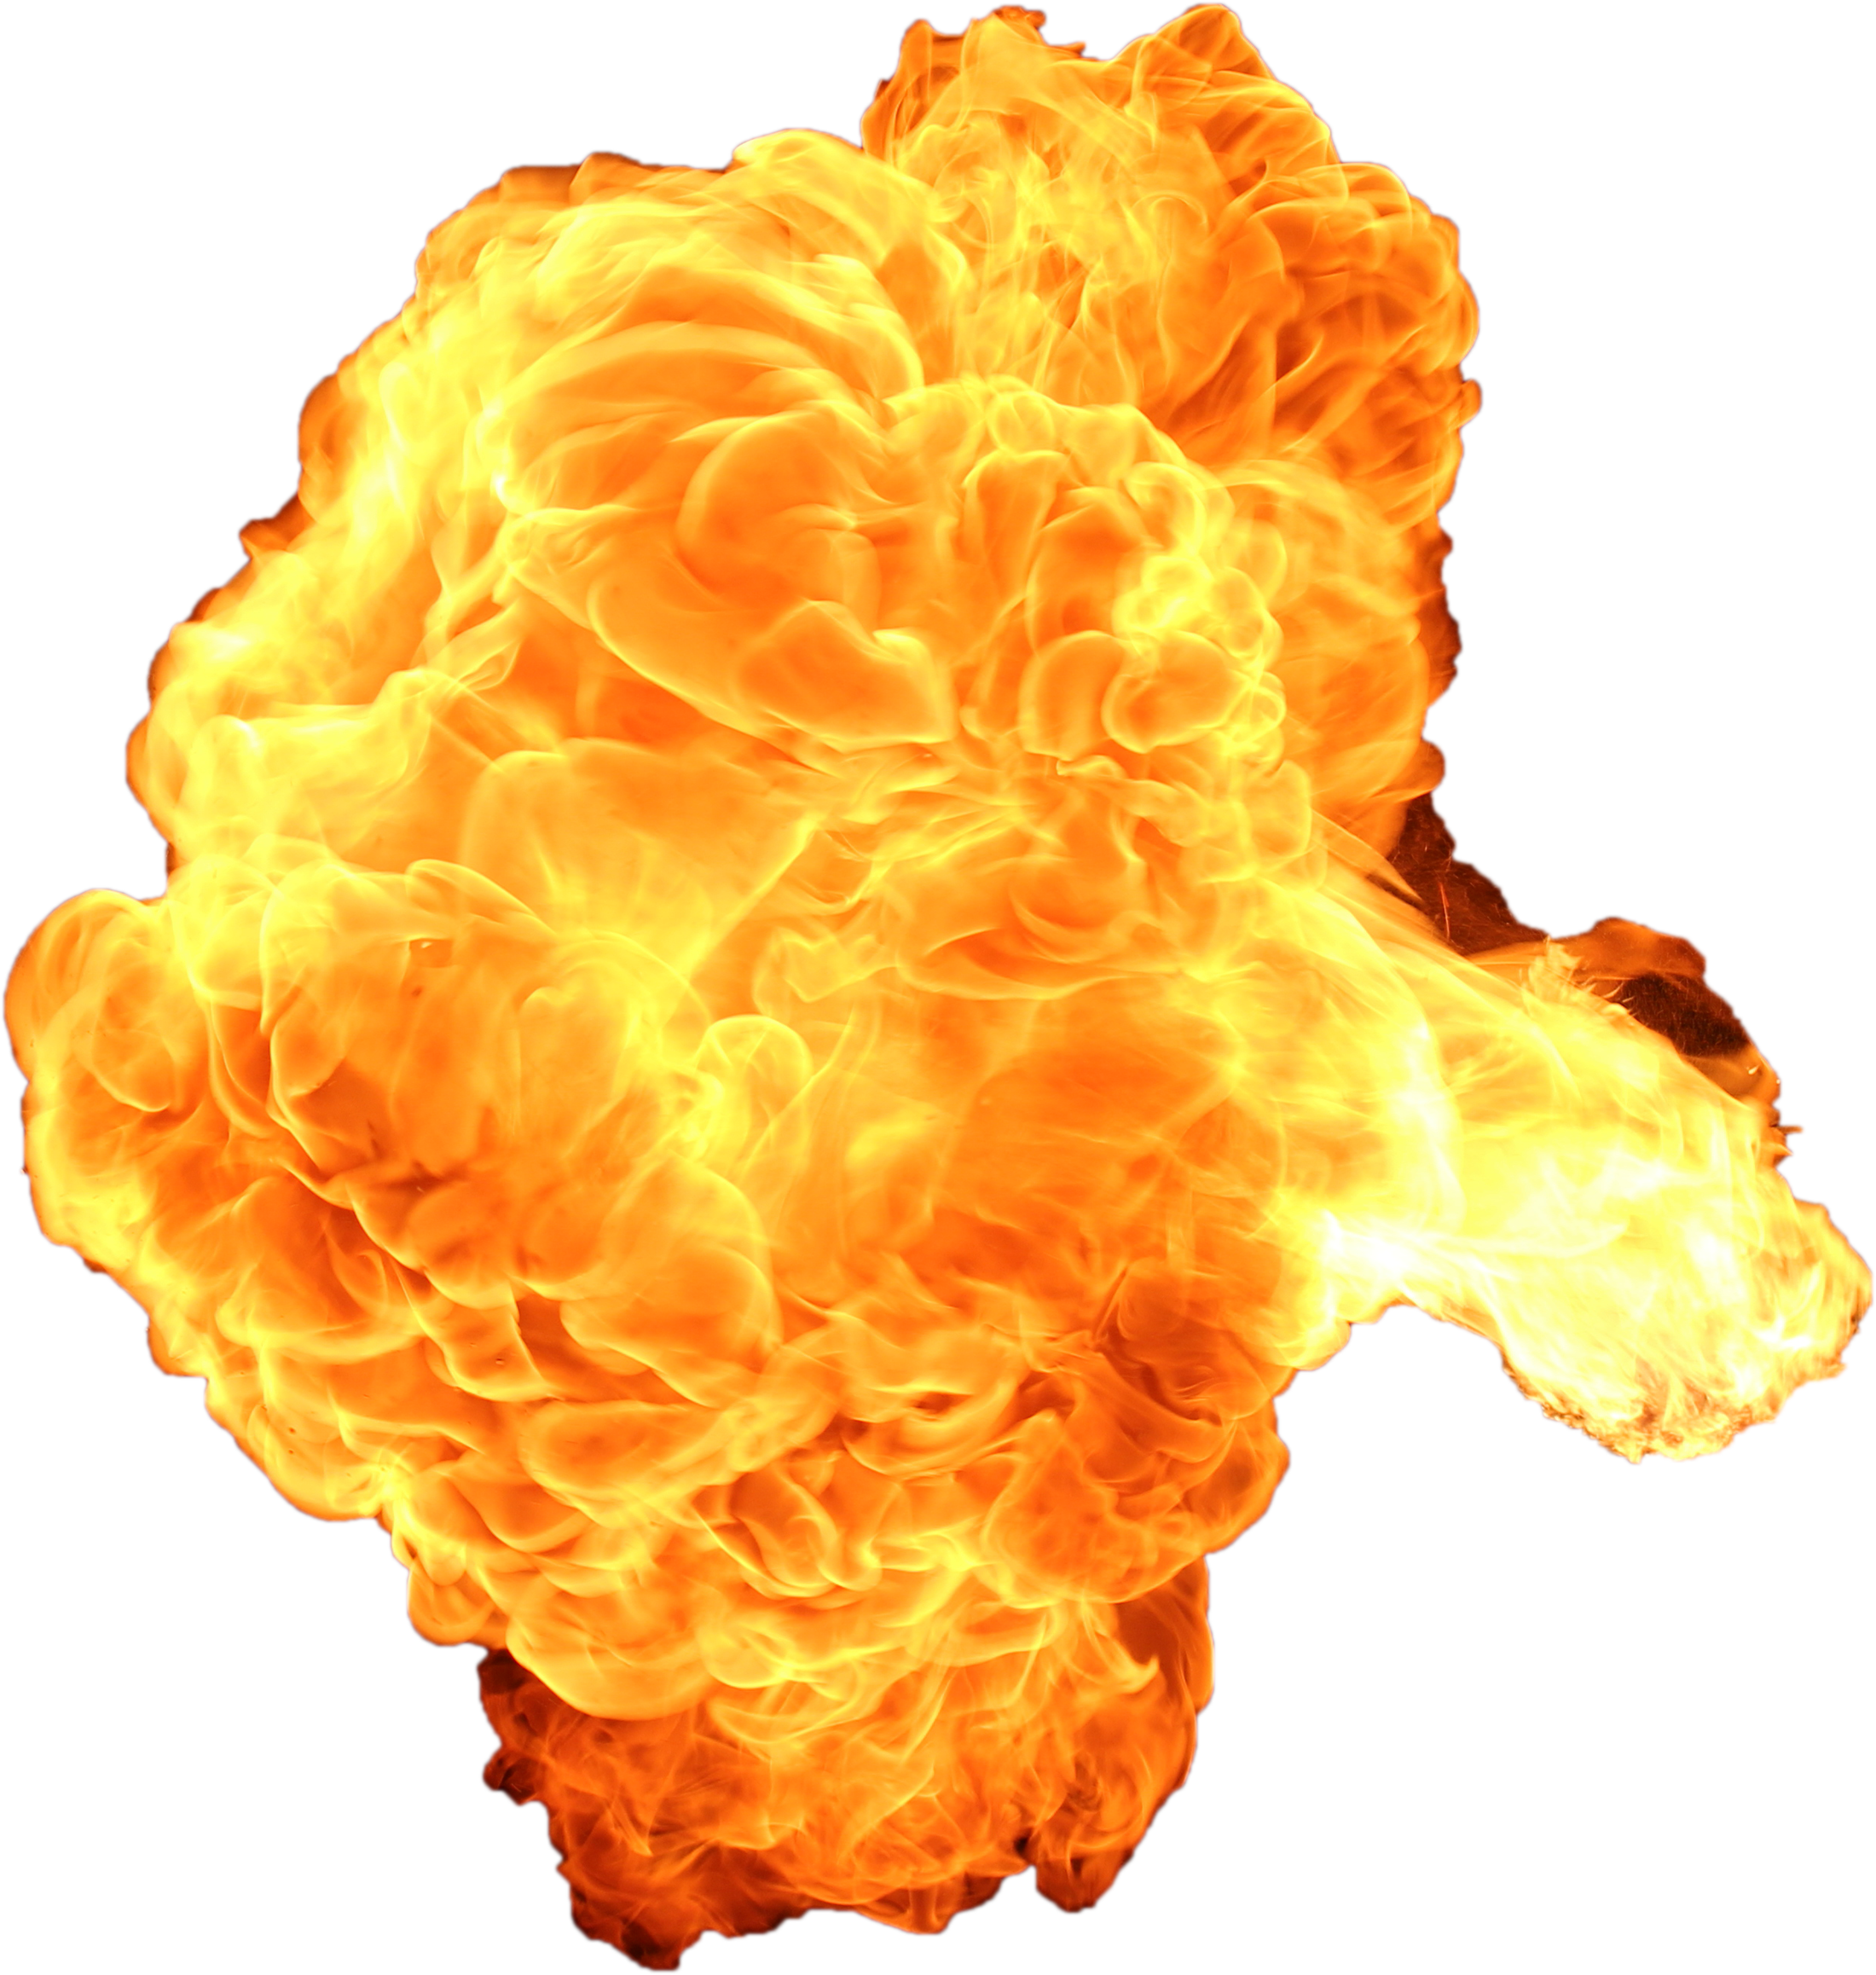 Fire Explosion PNG Transparent Image